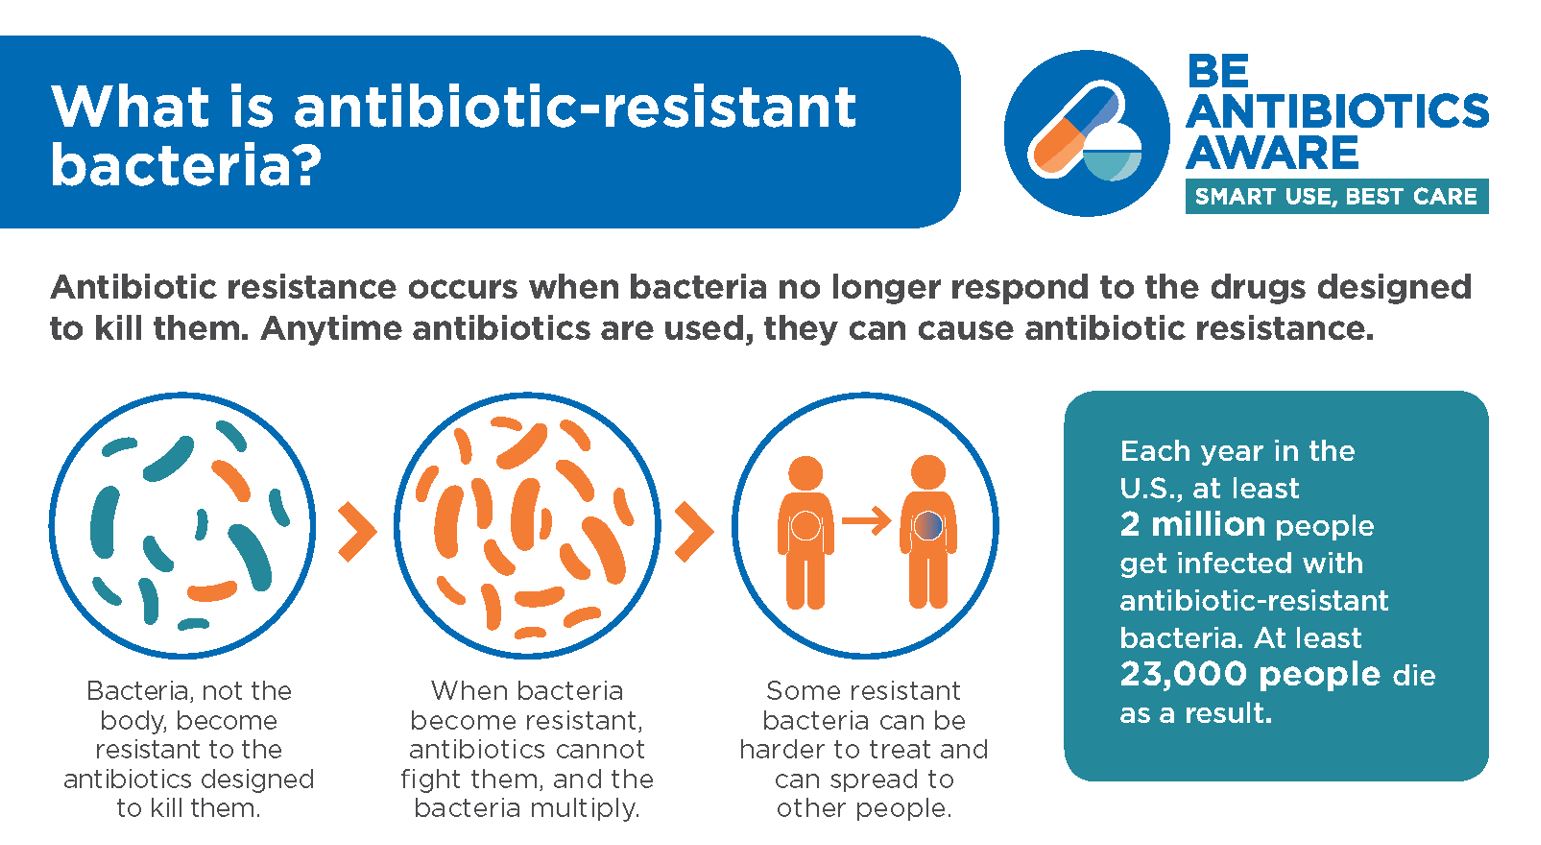 where bacteria becomes resistant to antibiotics